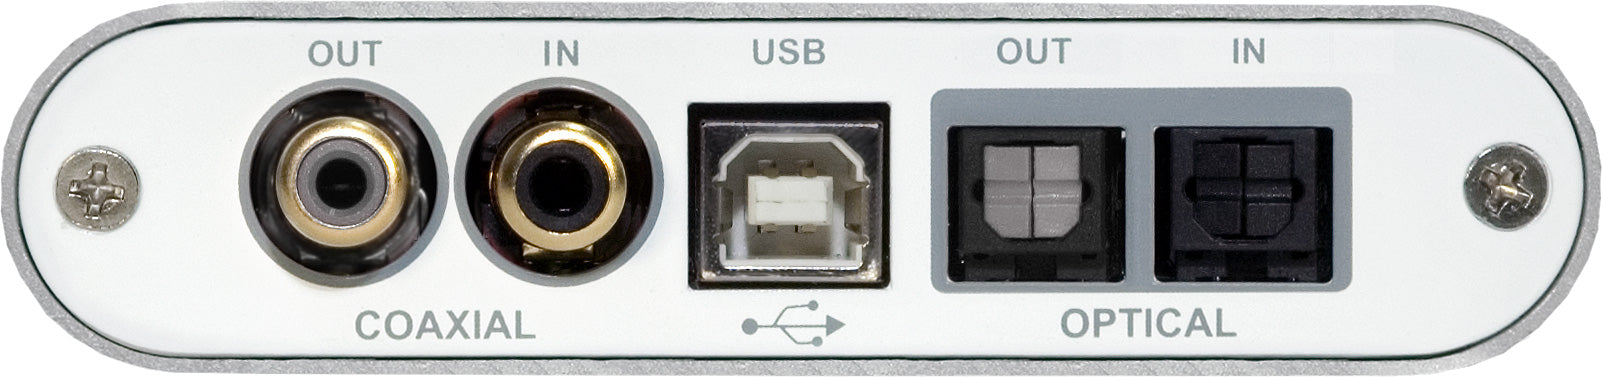 ESI Audio U24 XL 24-bit USB Audio Interface for PC & Mac with S/PDIF I/O - Silver